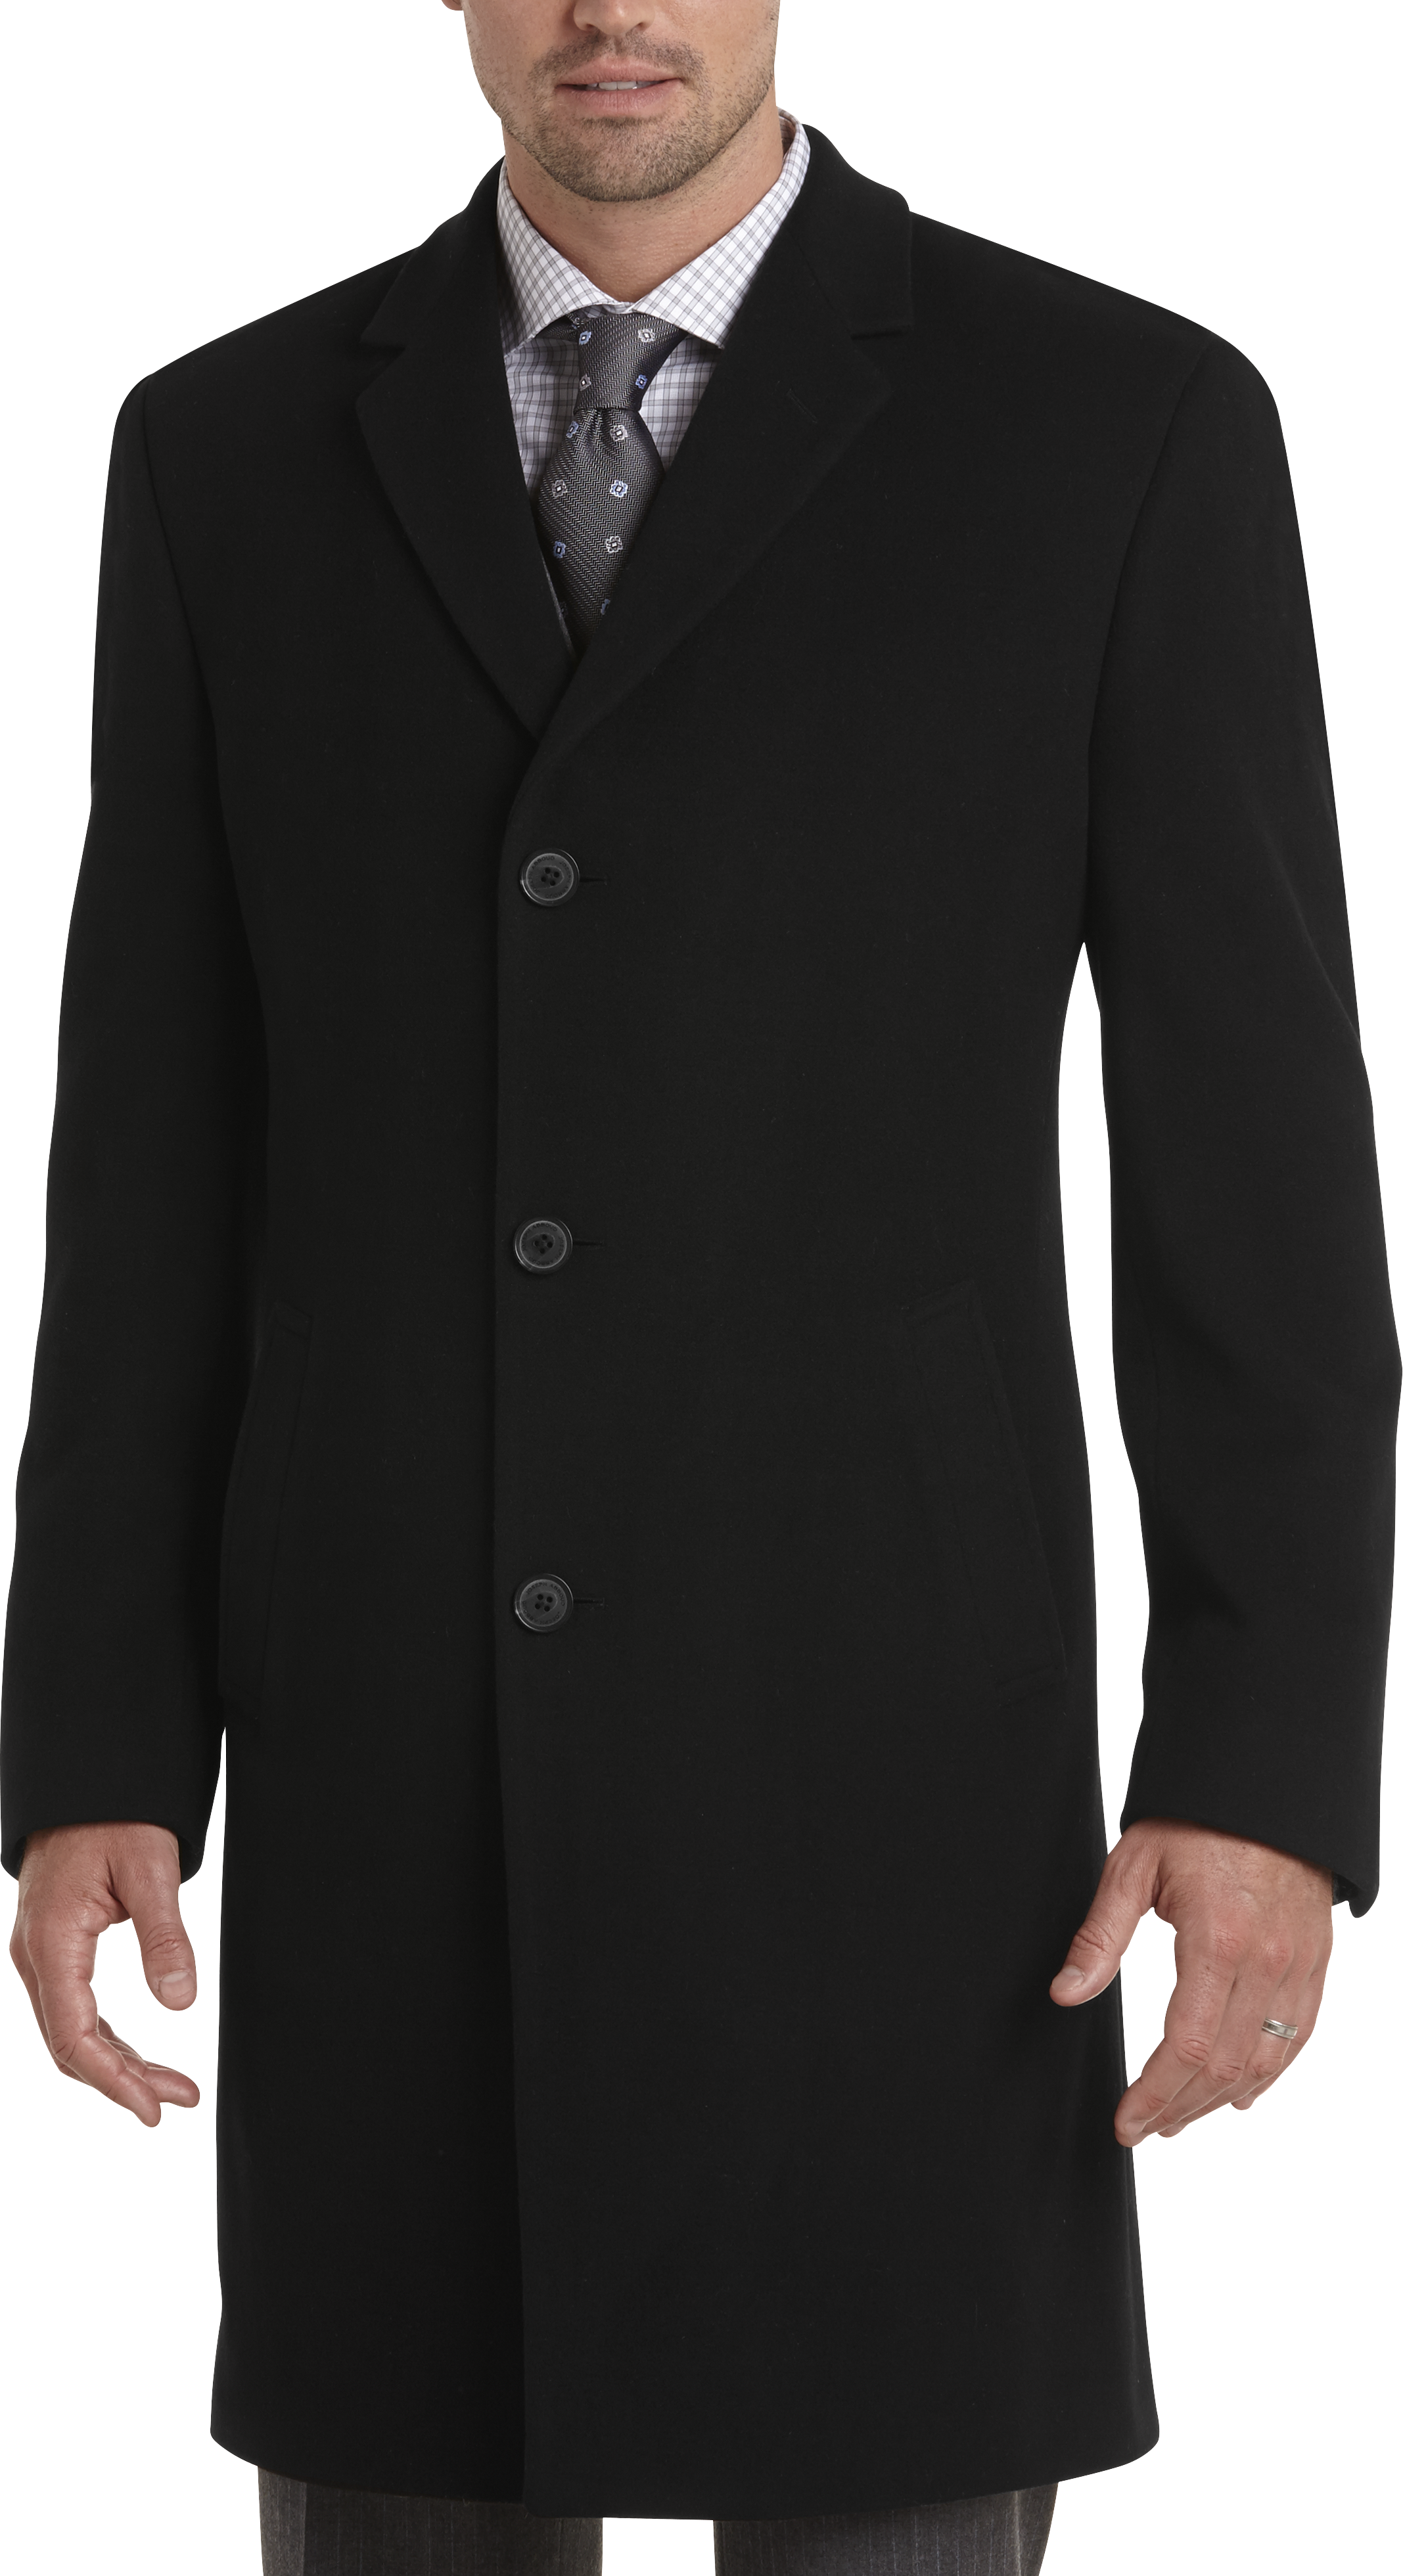 Joseph Abboud Black Cashmere Blend Modern Fit Topcoat - Men's Topcoats ...